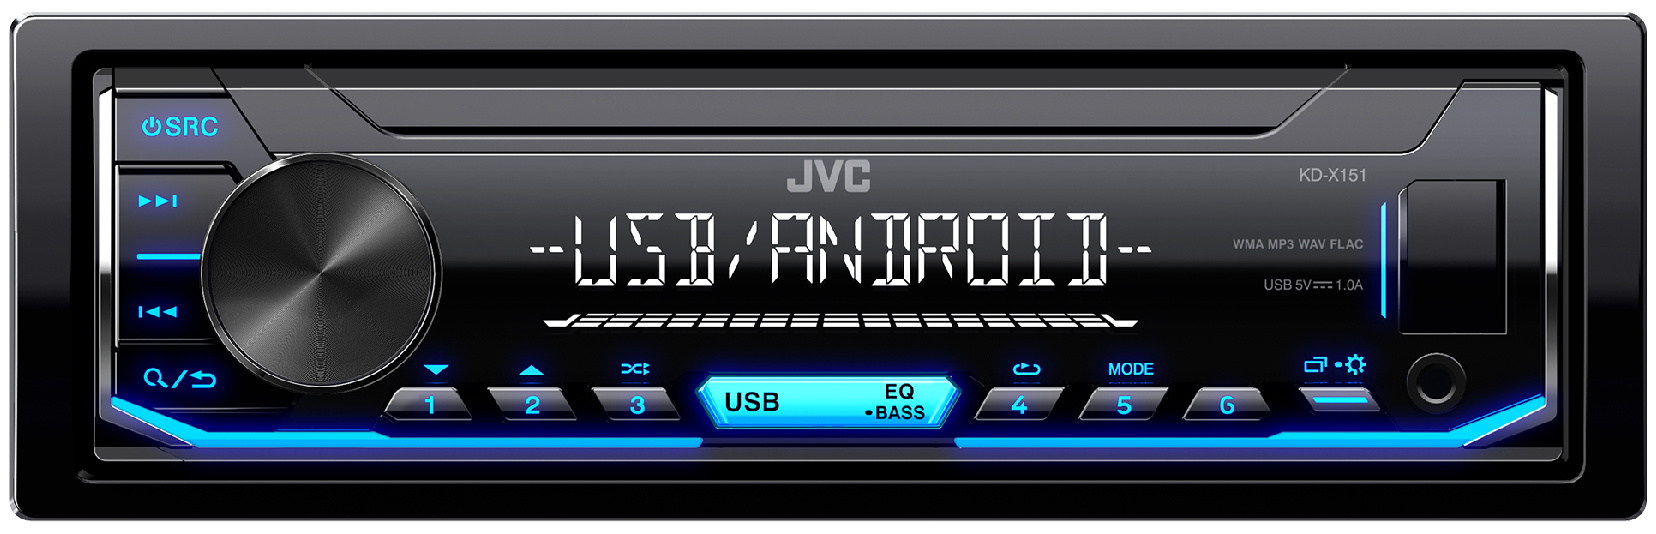 Auto radio JVC KDX151